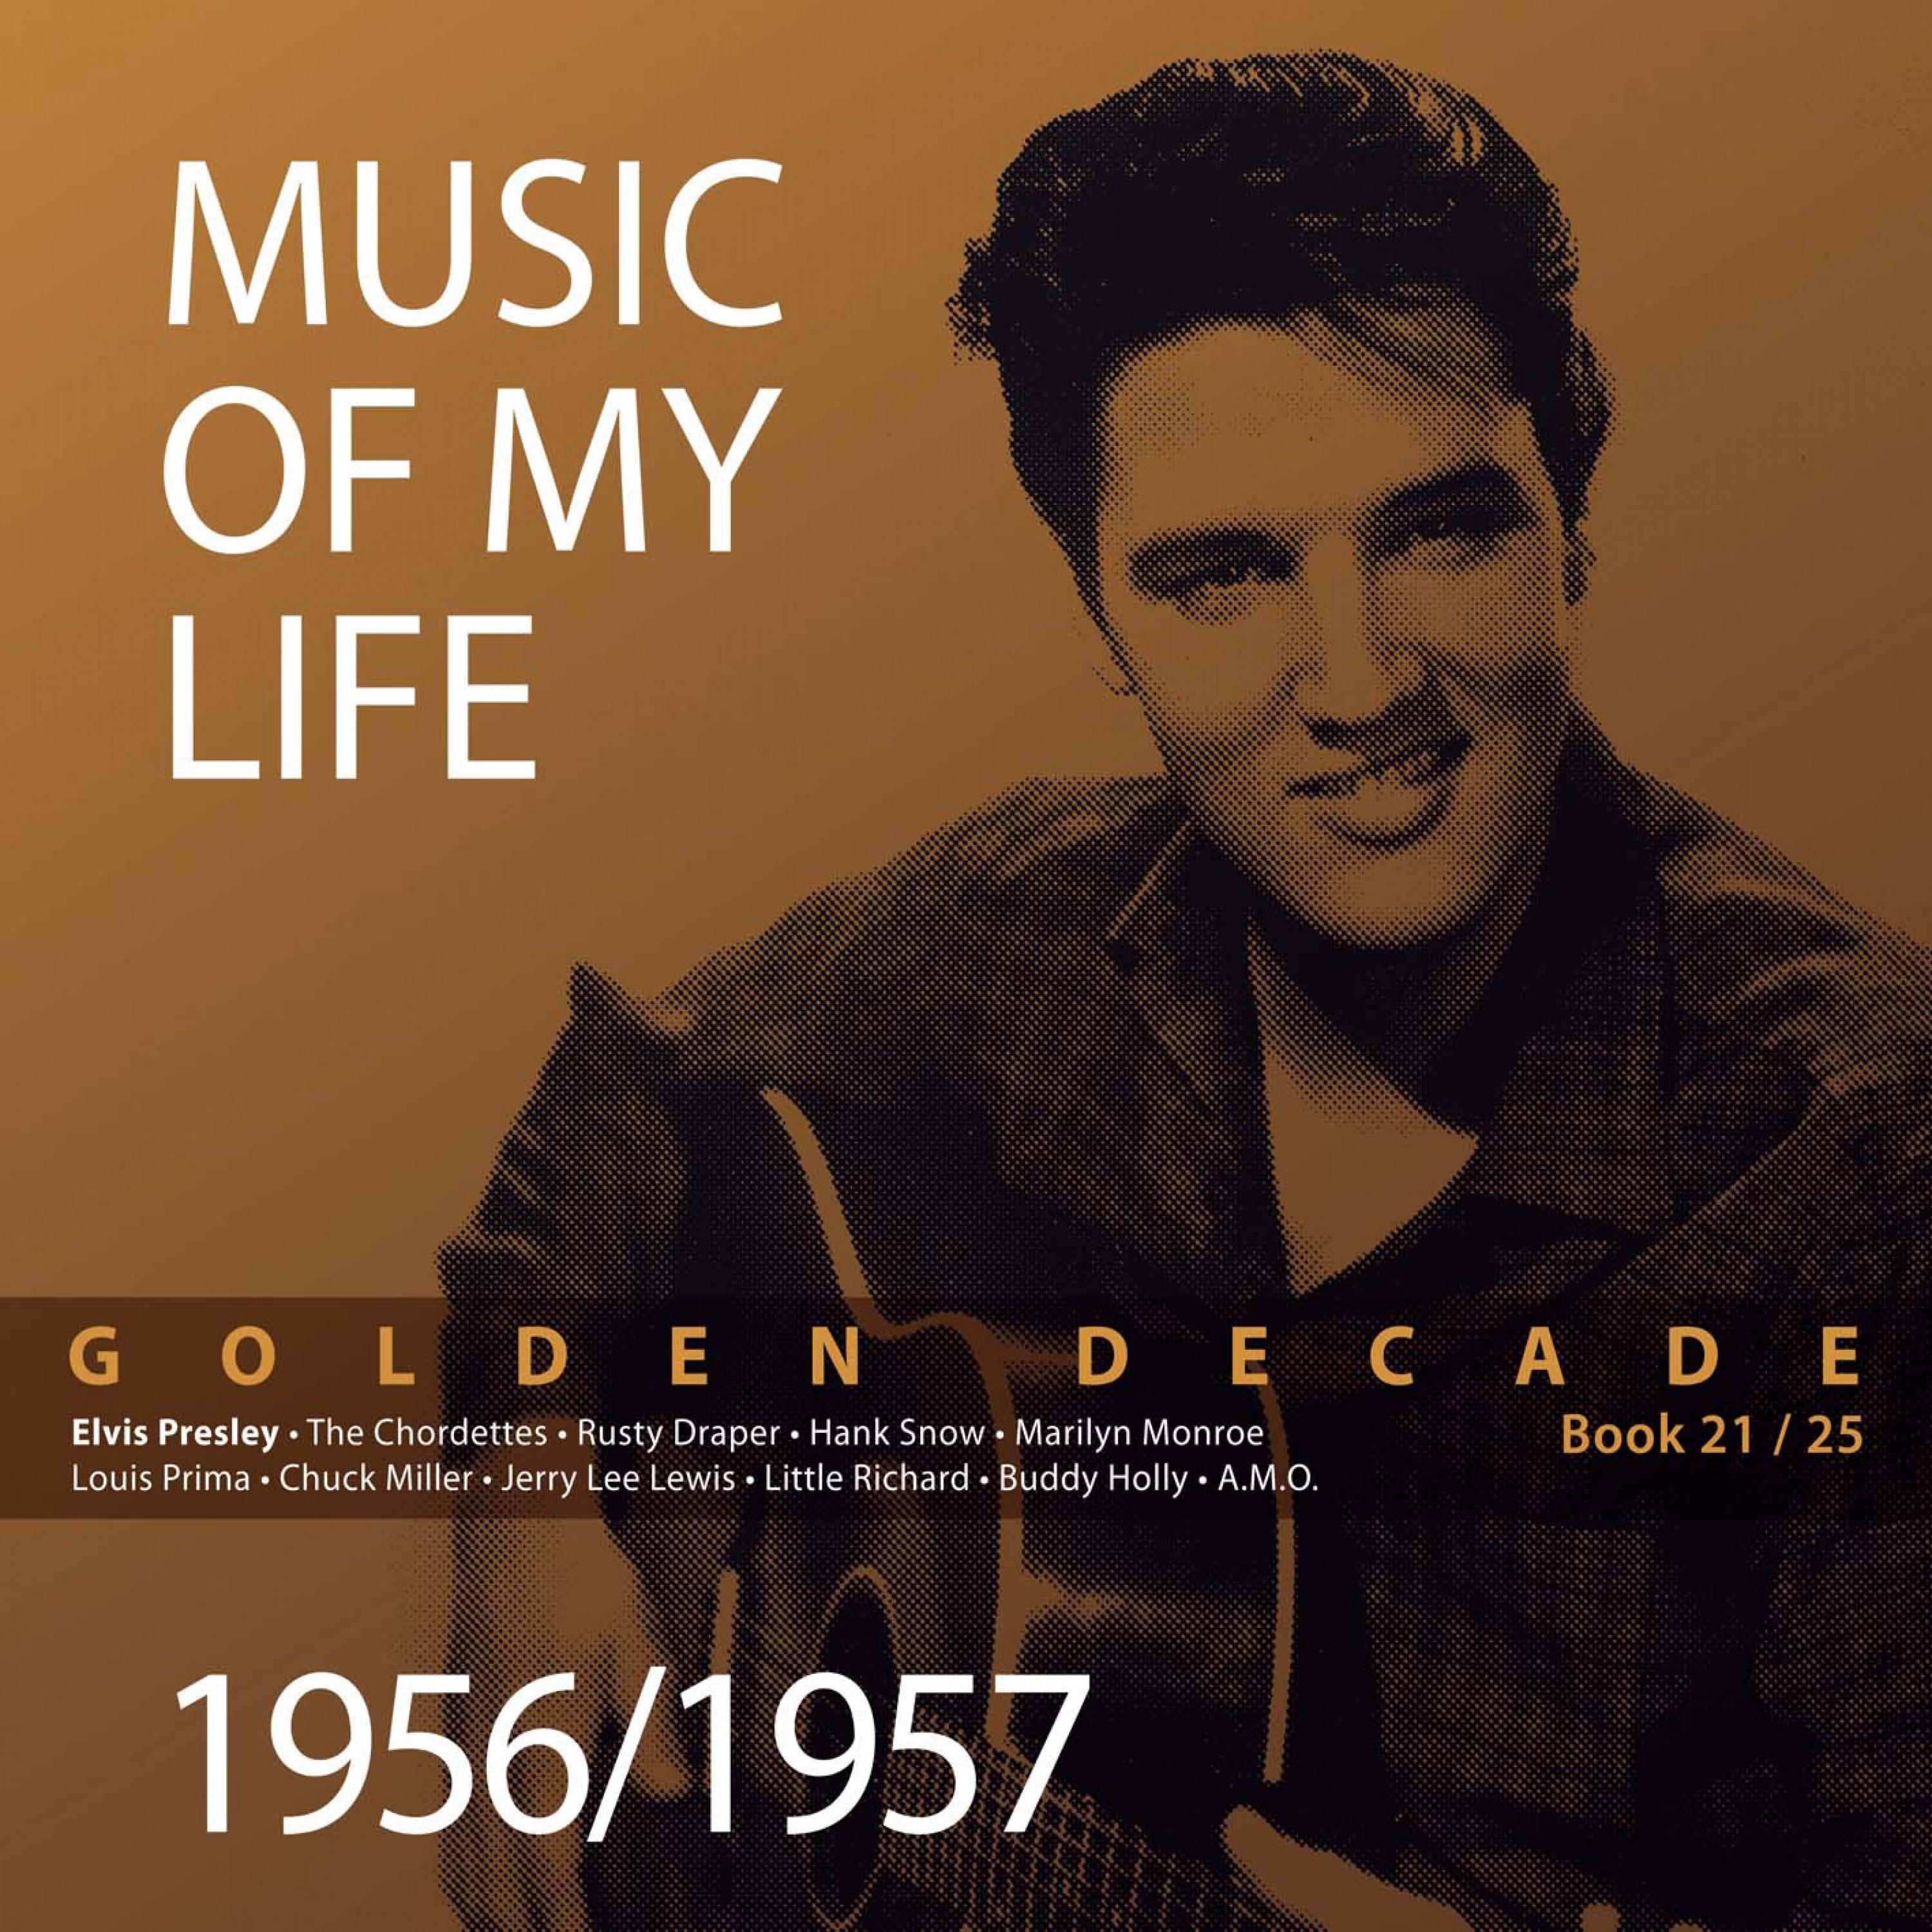 Golden Decade - Music of My Life (Vol. 21)